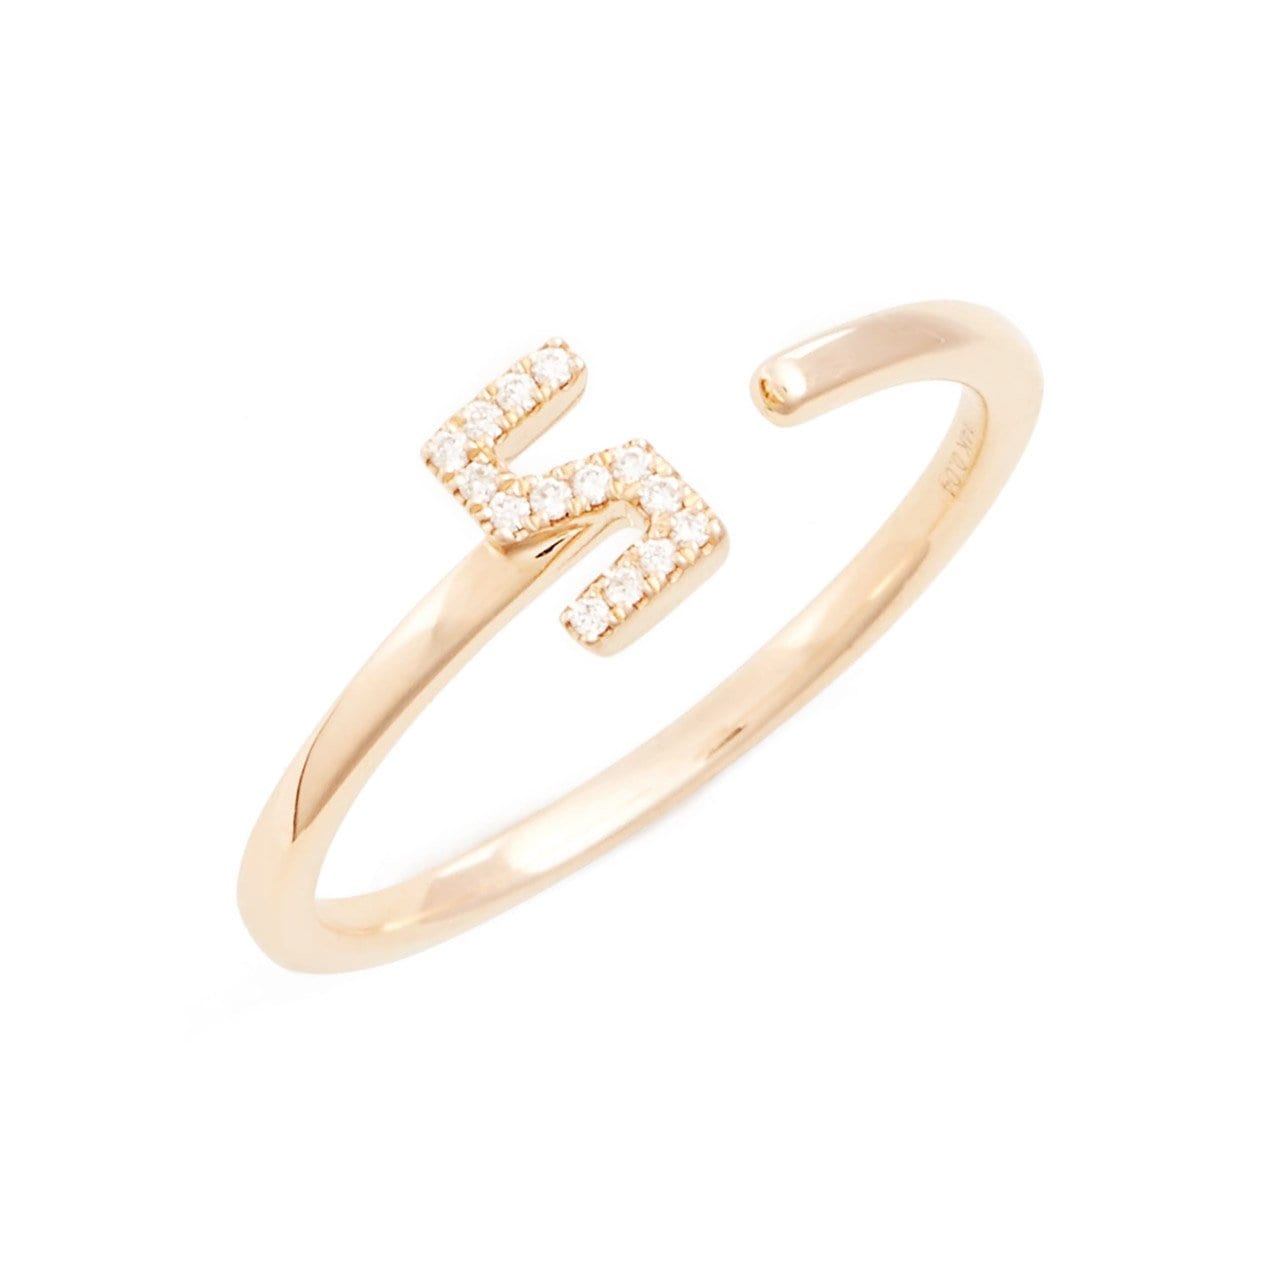 Vincents Fine Jewelry | Dana Rebecca | Single Initial Ring